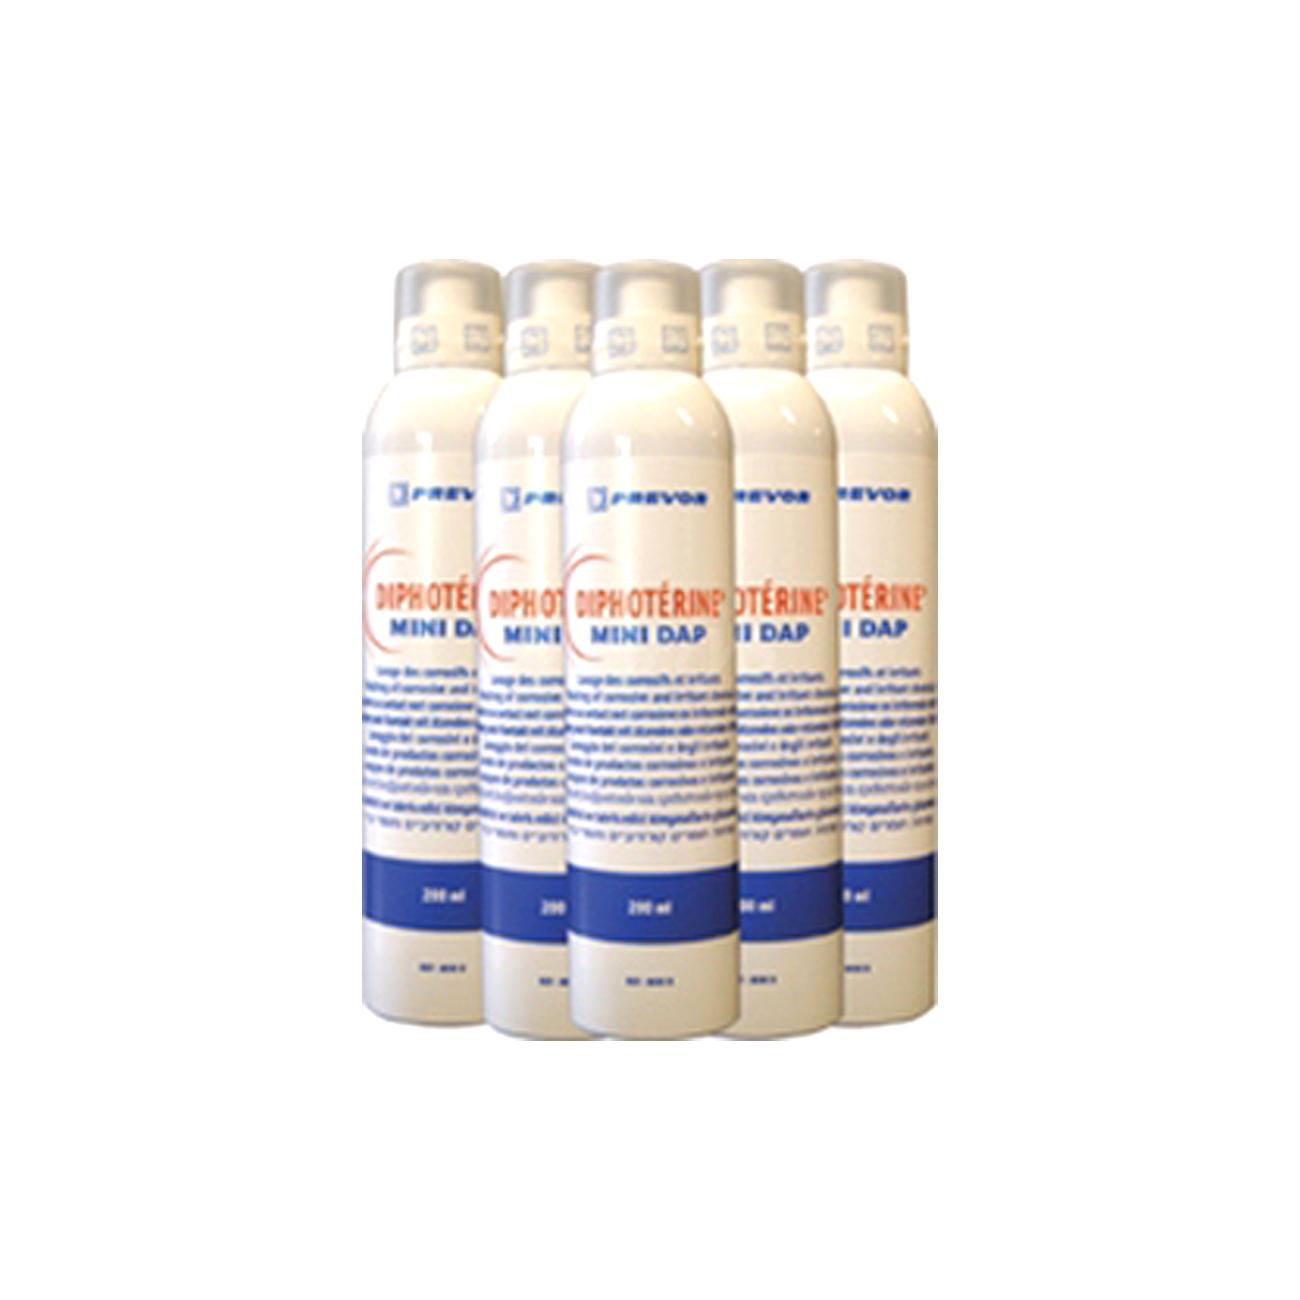 Diphoterine Spray Minidap 200 Ml (6 Stuks)